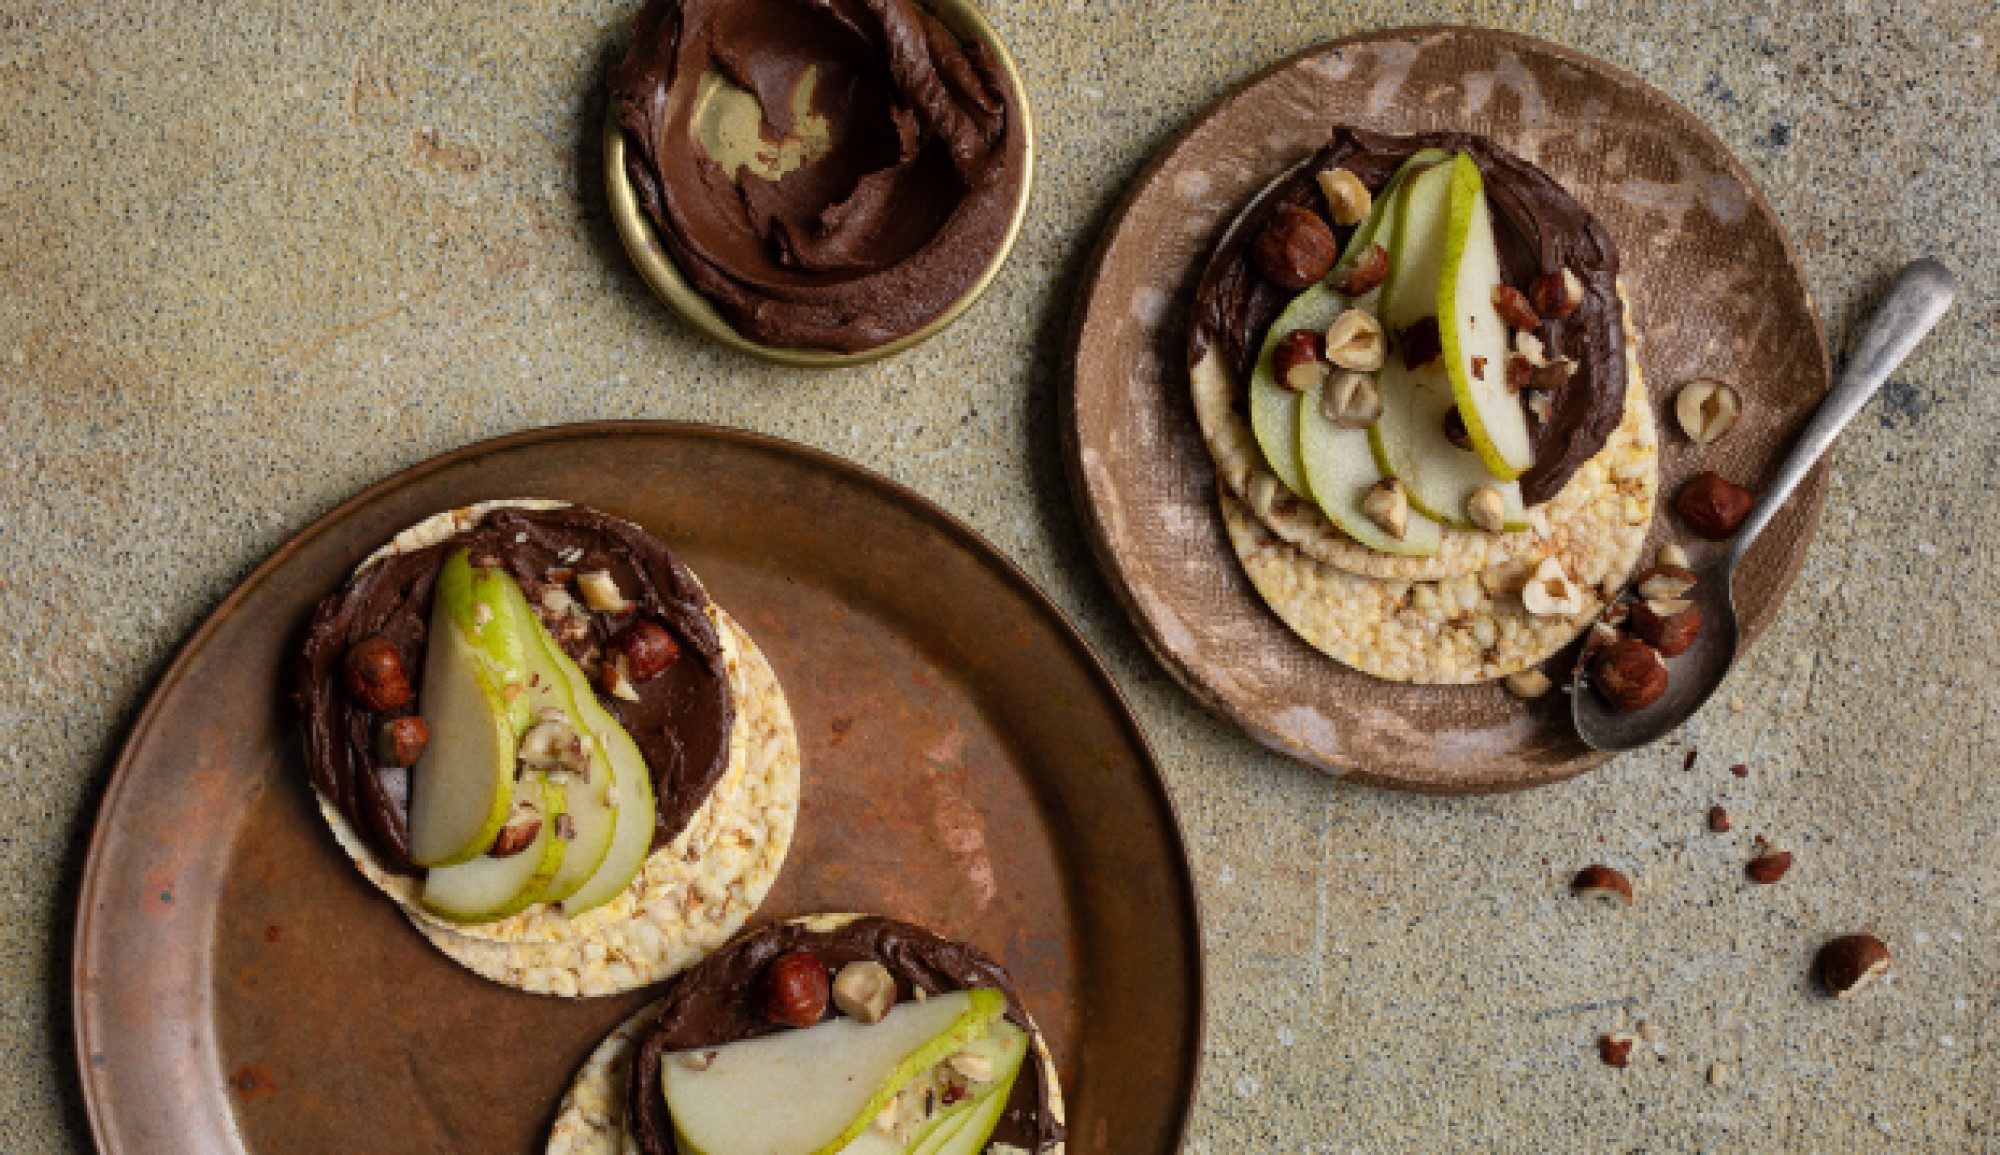 Choc Hazelnut spread, pear & hazelnuts on Corn Thins slices